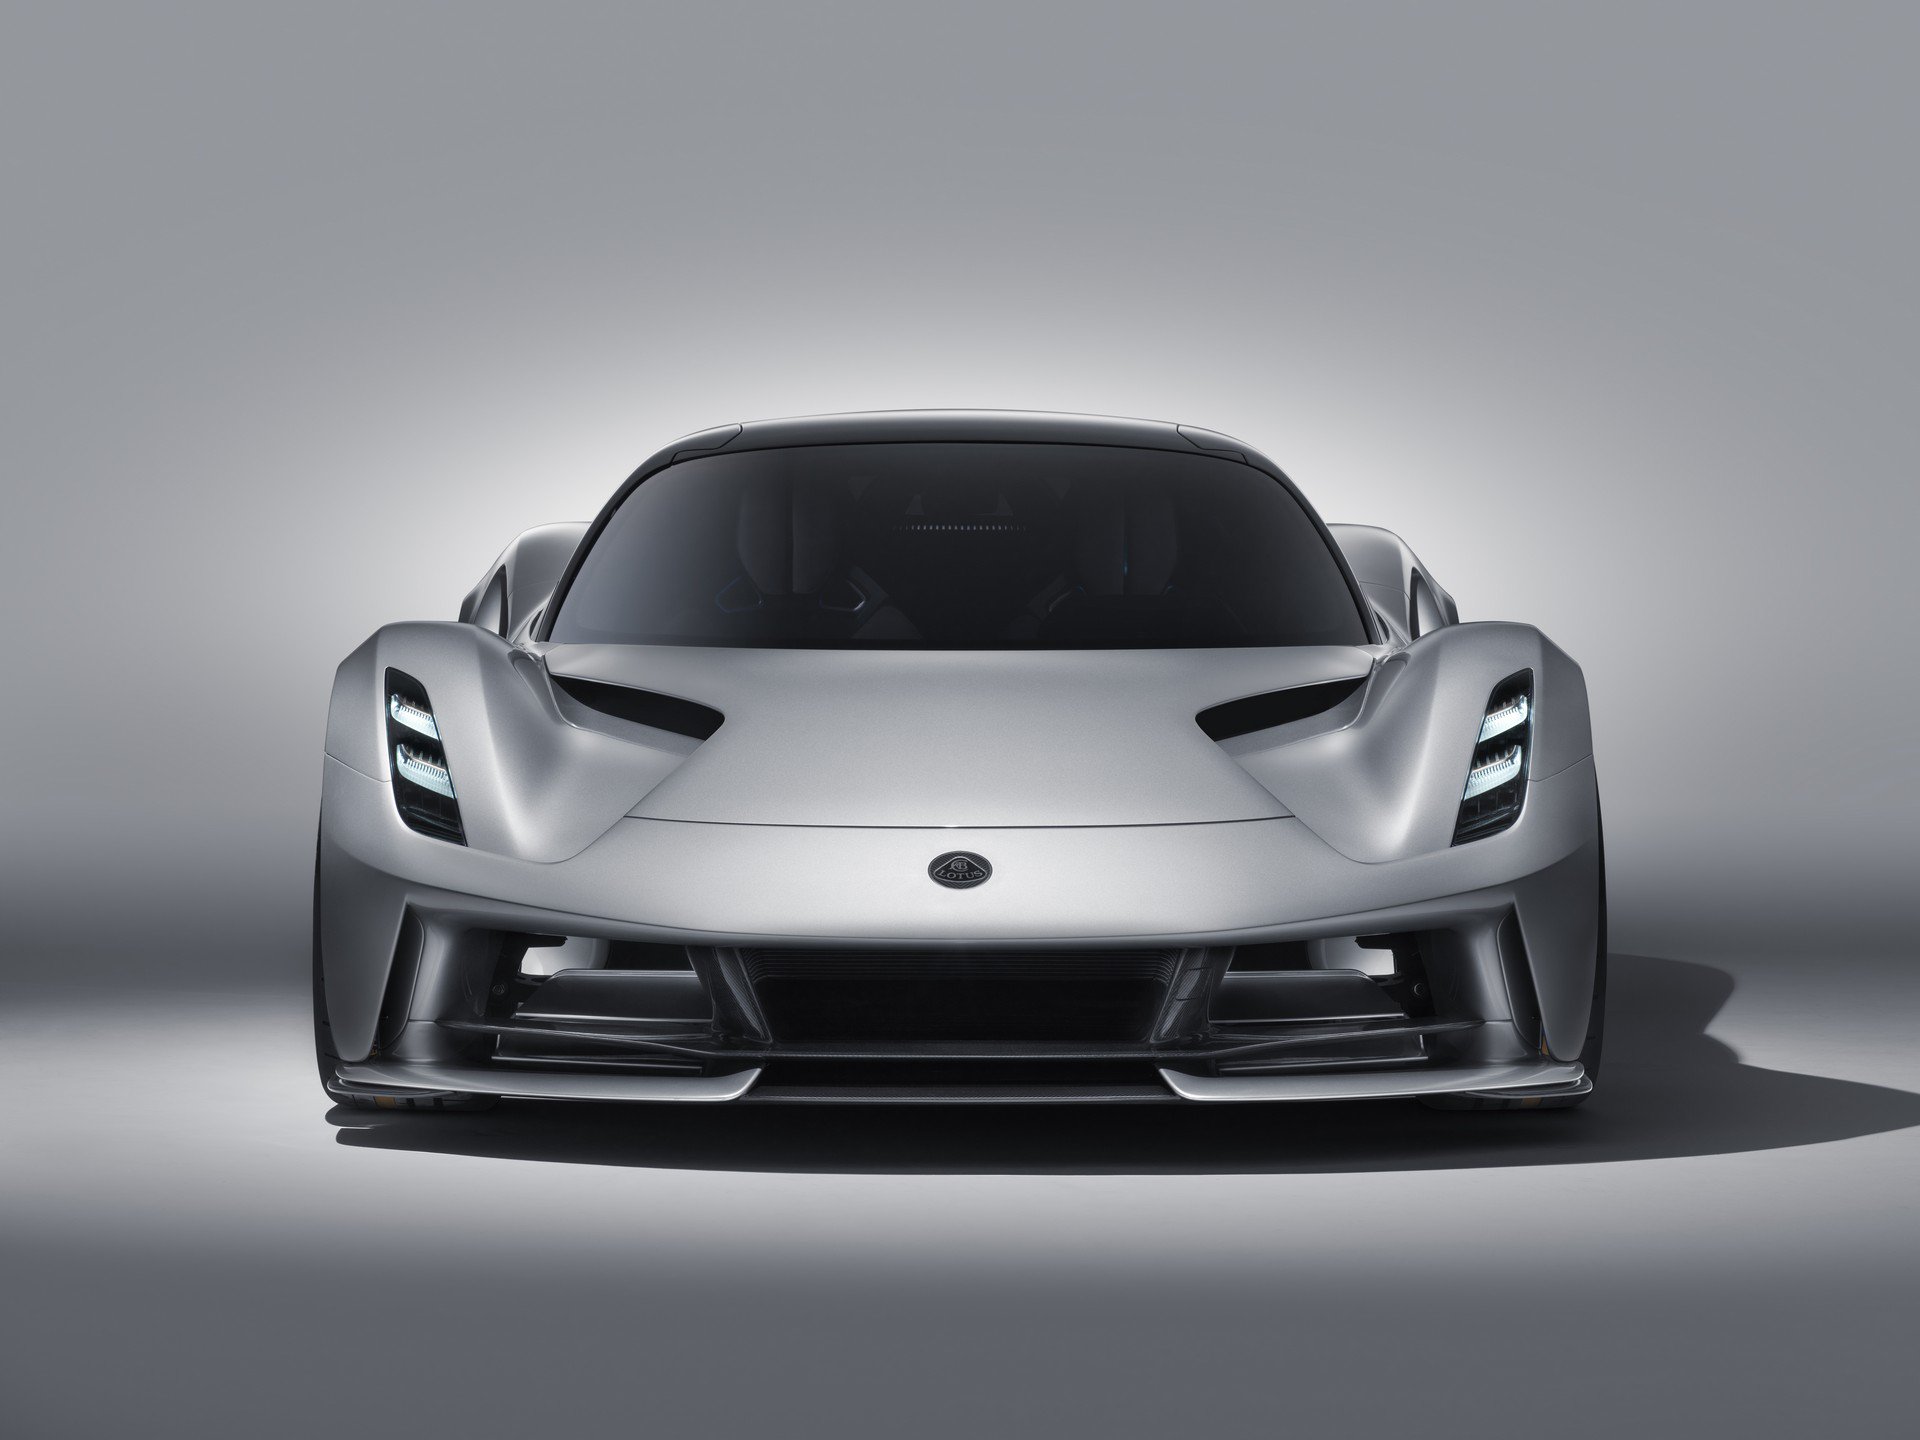 Lotus'un elektrikli hiper otomobili Evija tanıtıldı: 18 dakika şarjla 400 km menzil